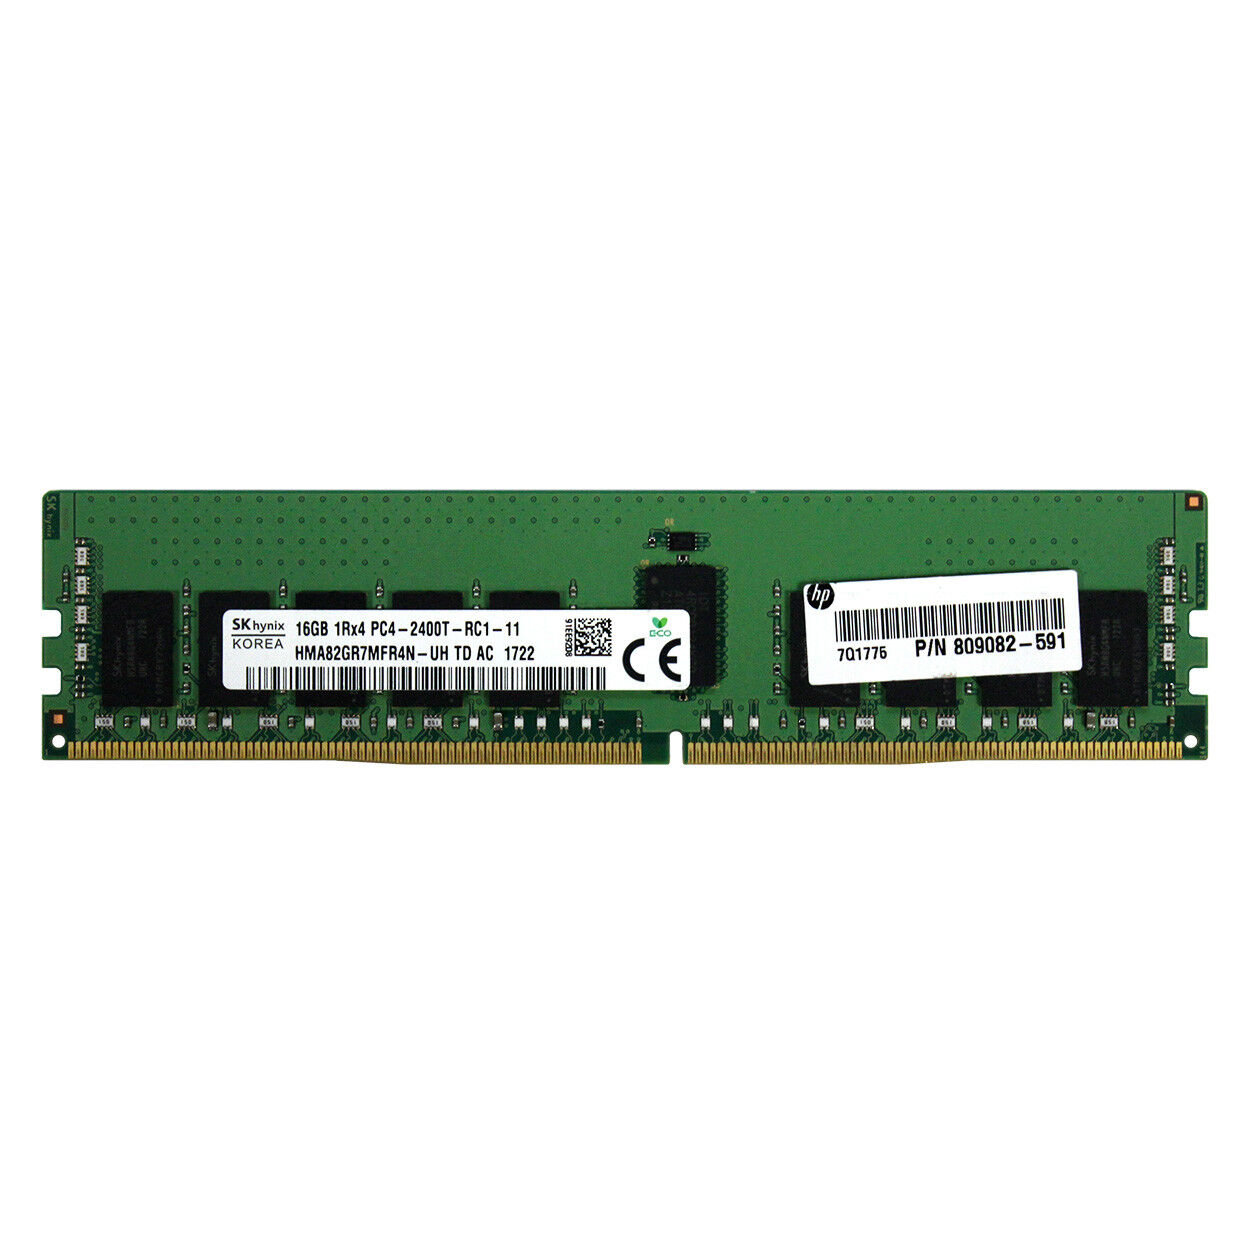 HP 809082-591 16GB 1Rx4 DDR4 19200 PC4-2400-R ECC REGISTERED SERVER MEMORY RAM